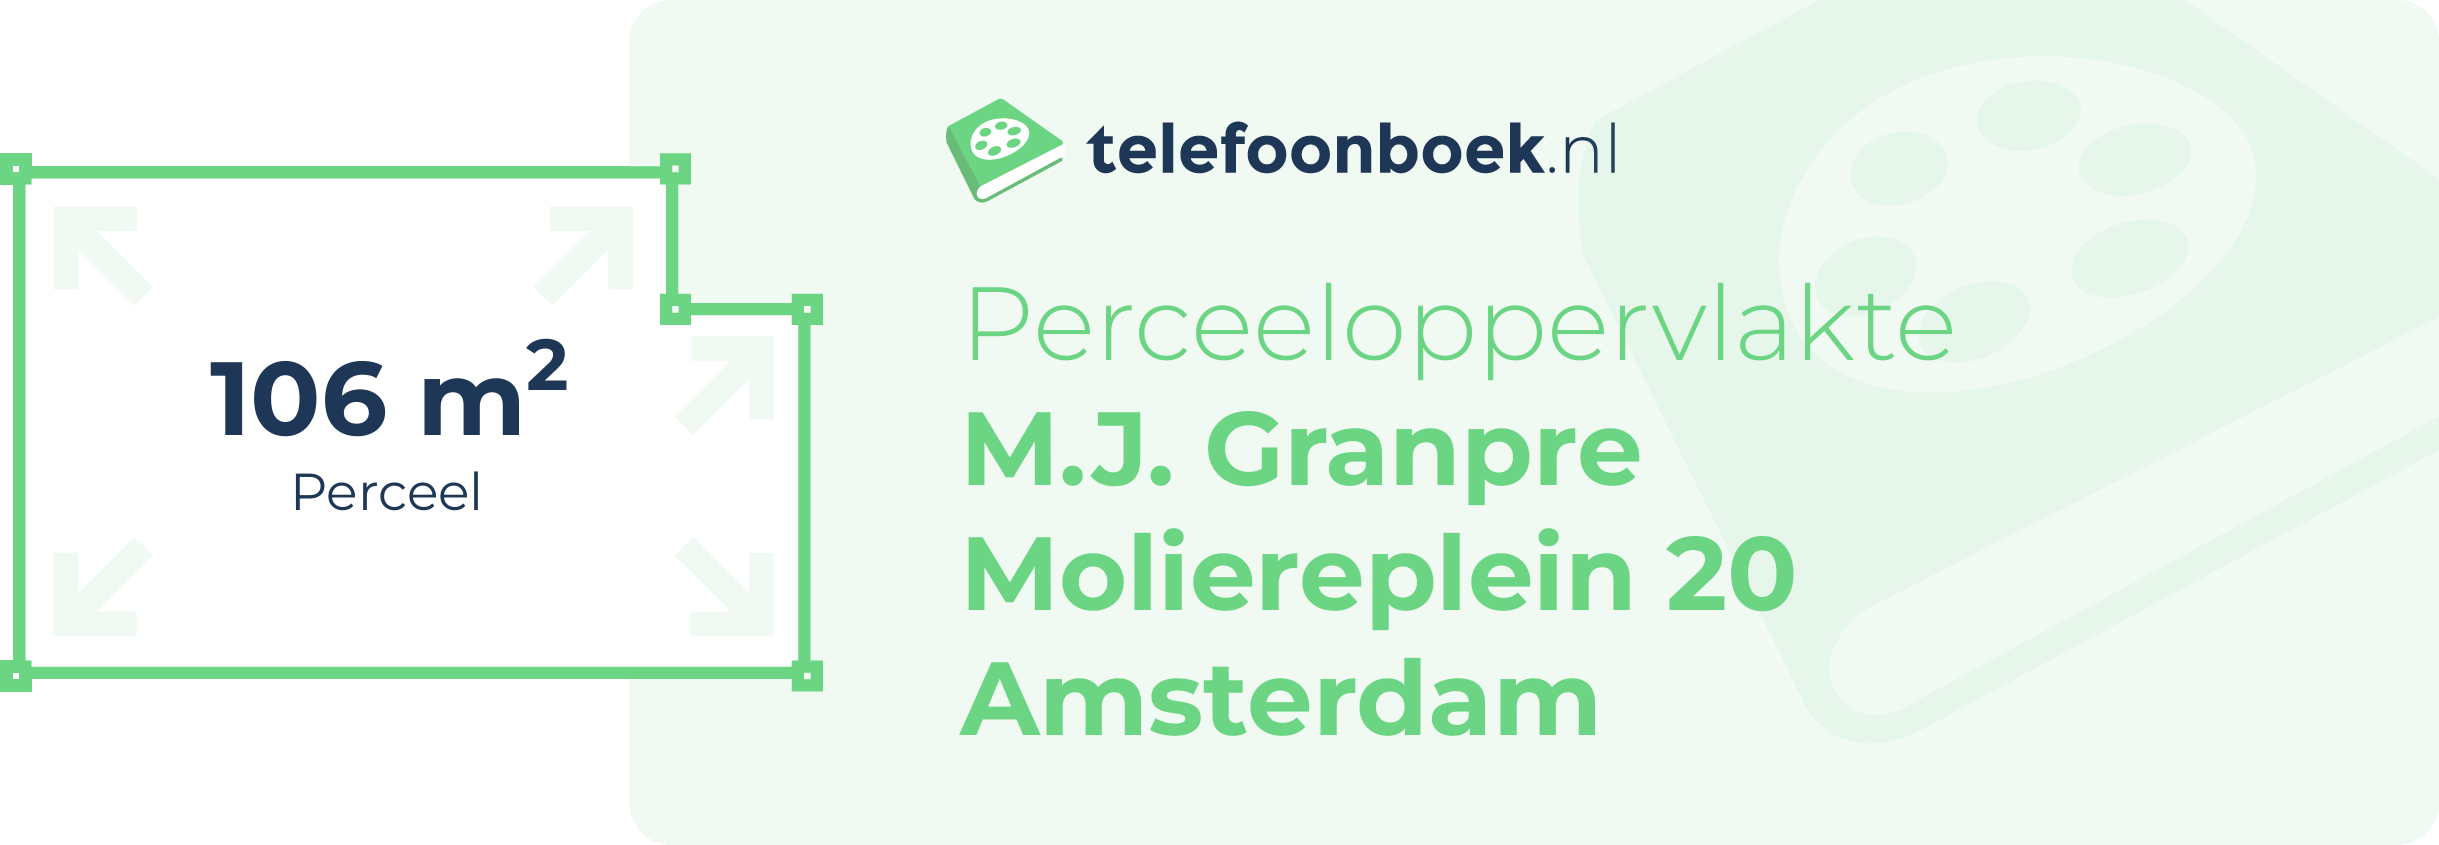 Perceeloppervlakte M.J. Granpre Moliereplein 20 Amsterdam